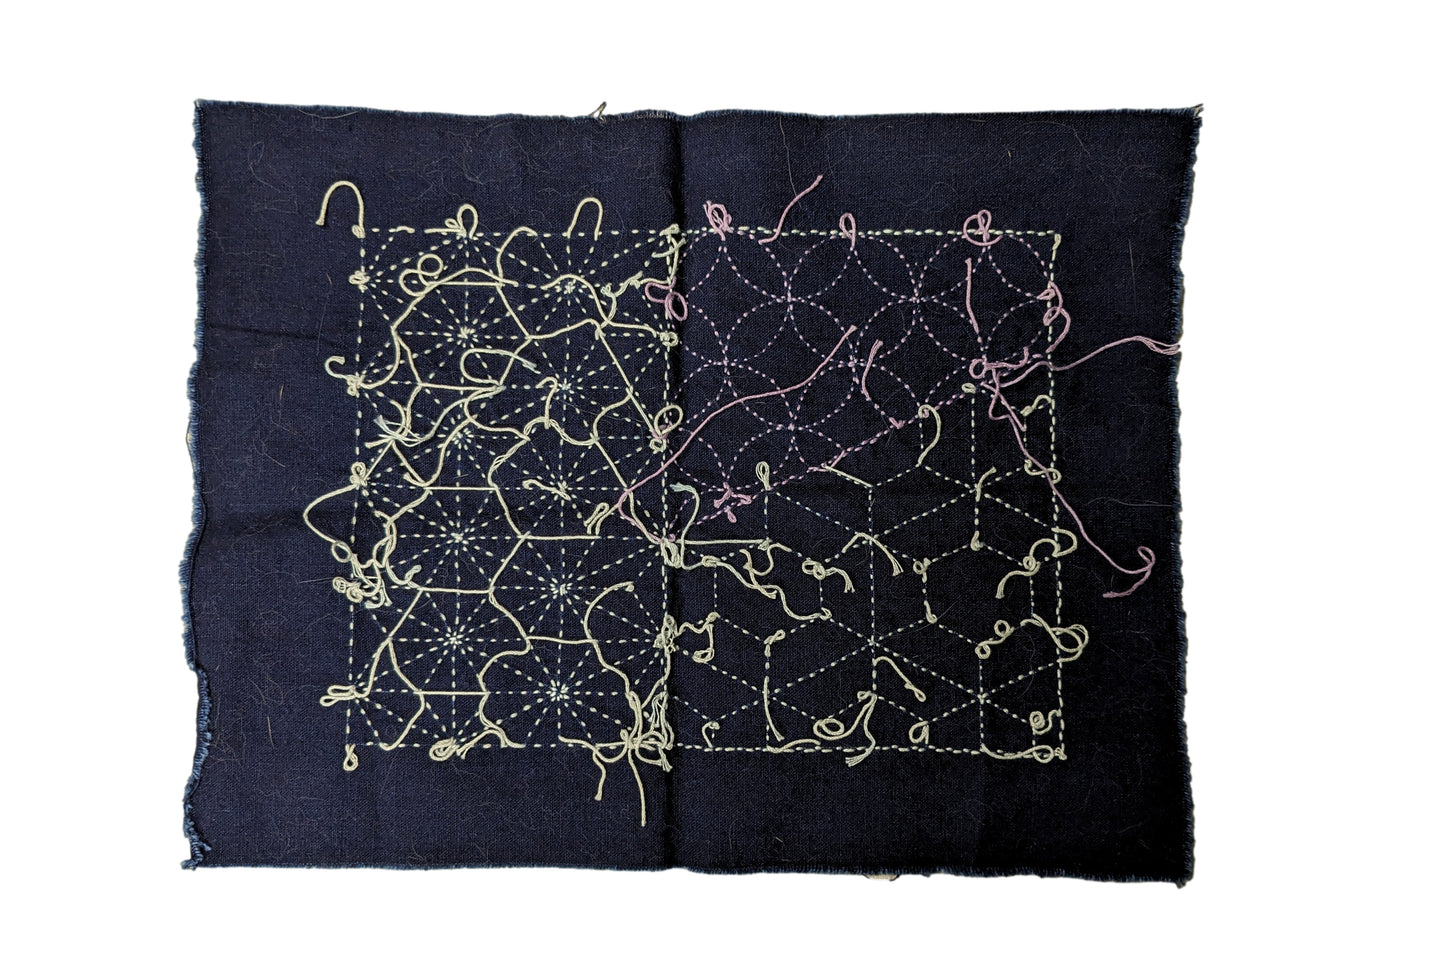 Sashiko Stitched Fabric #SSF0123